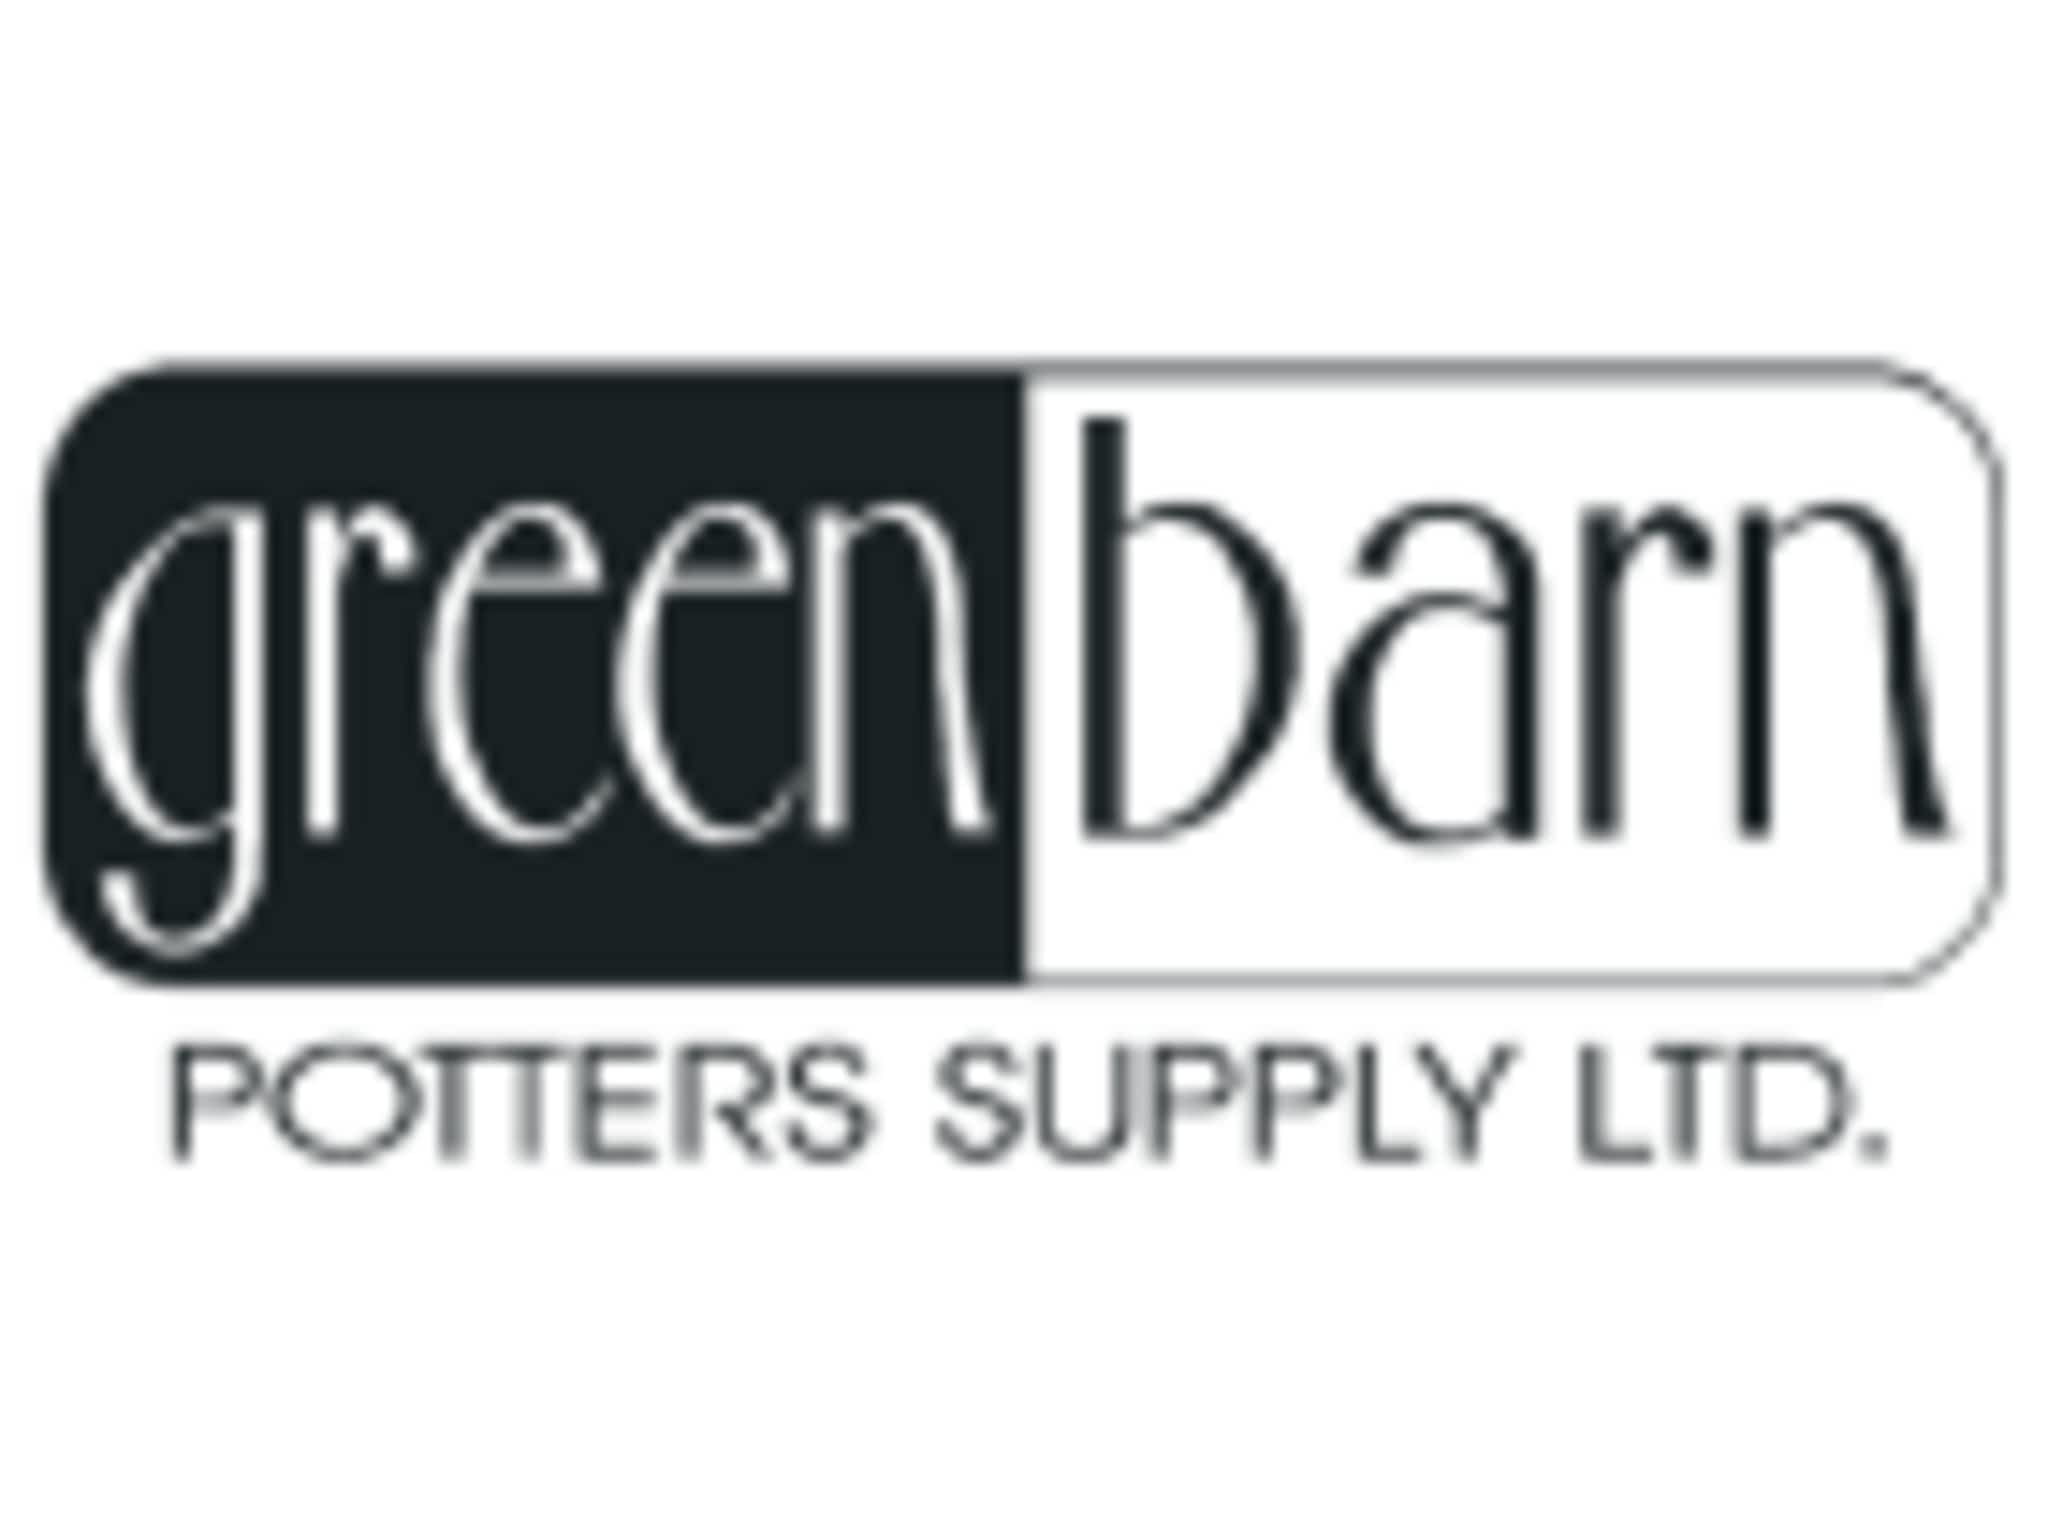 photo Greenbarn Potters Supply Ltd